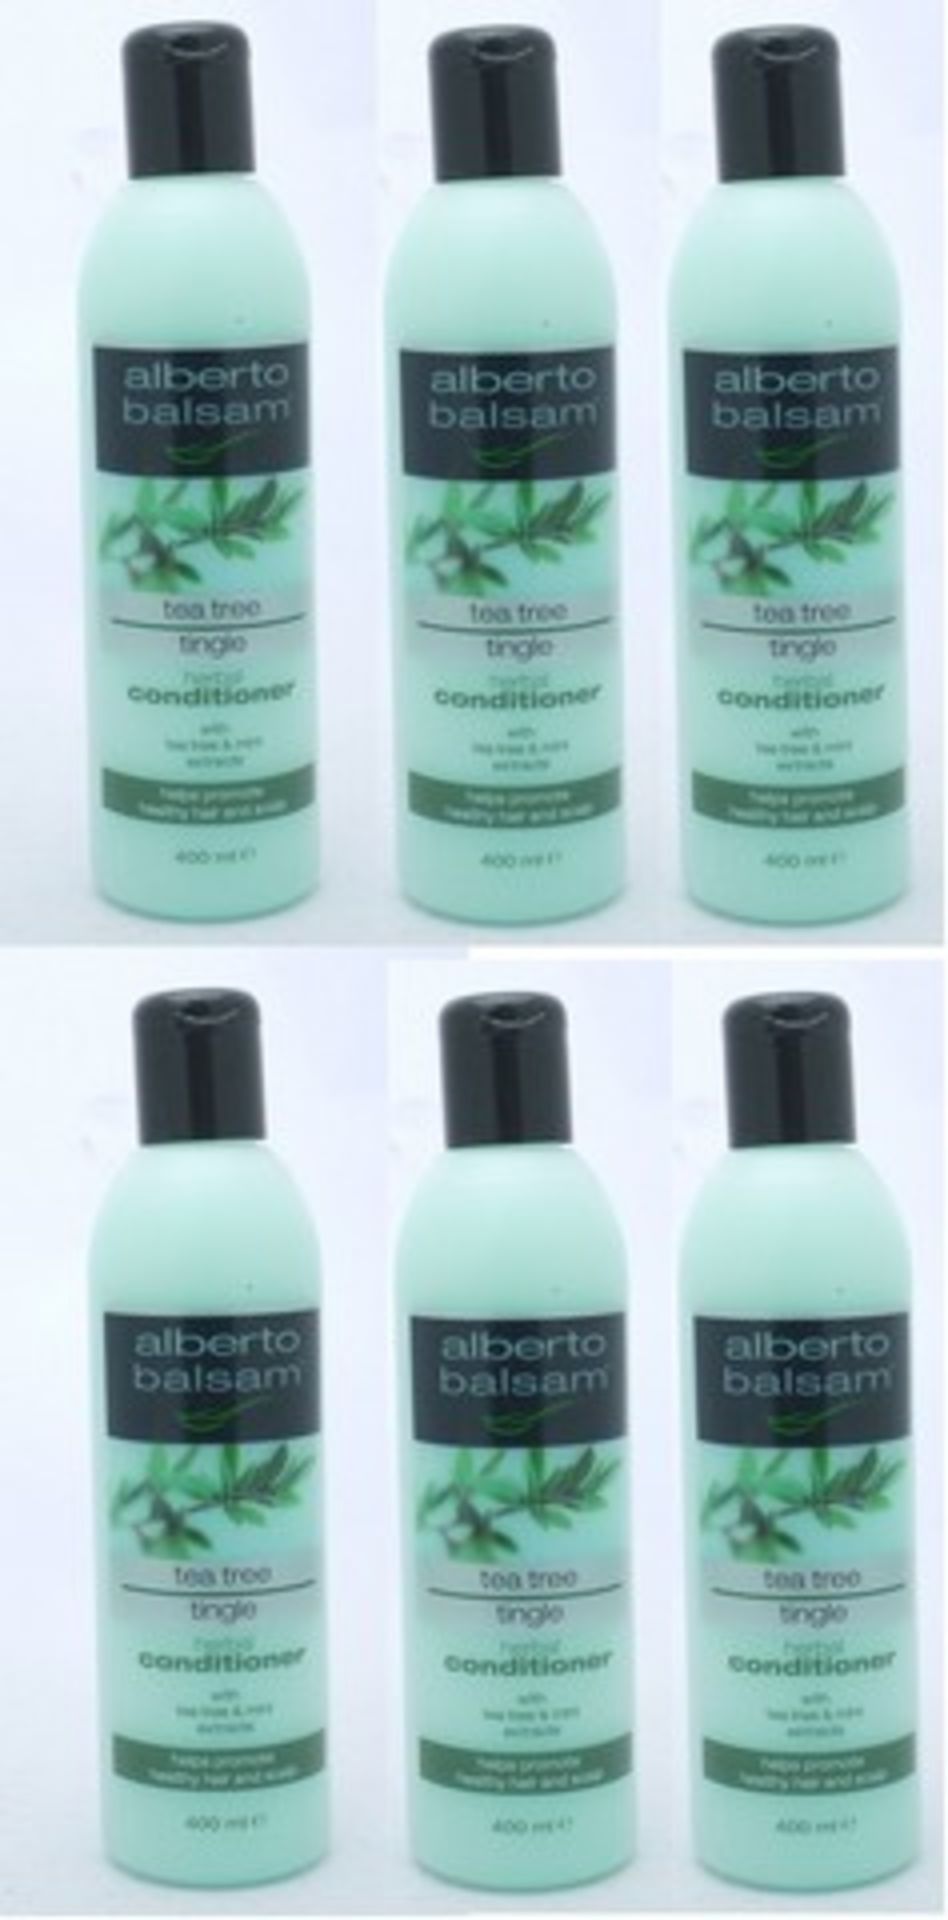 + VAT Brand New Lot Of 6 Alberto Balsam Tea Tree Tingle Herbal Conditioner 400 ml Total eBay Price